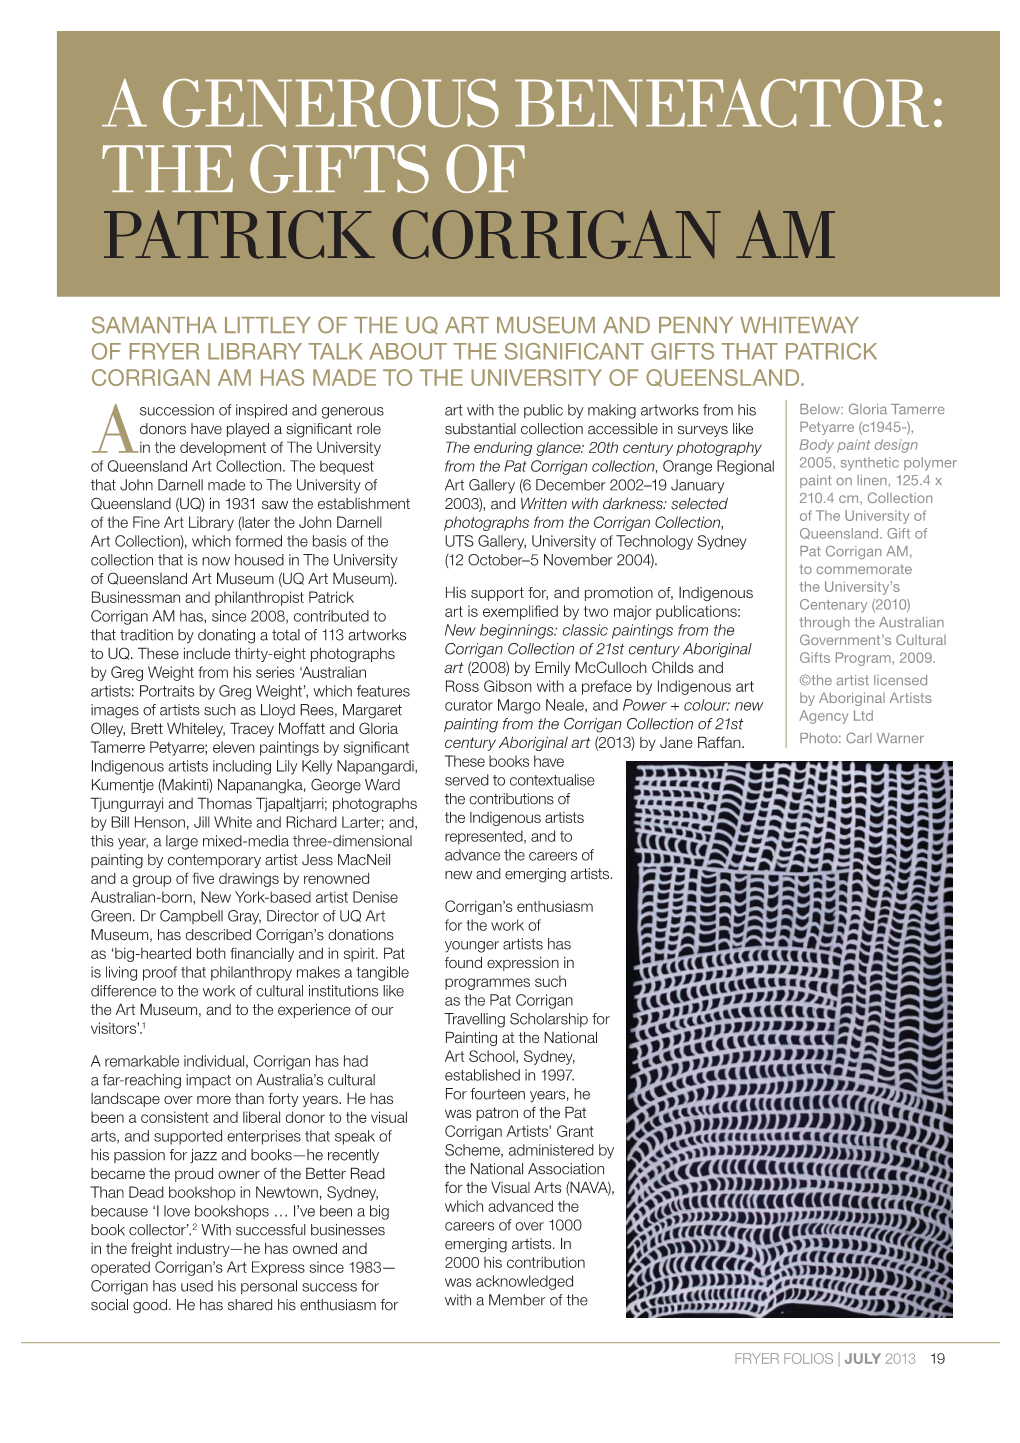 A Generous Benefactor: the Gifts of Patrick Corrigan, AM